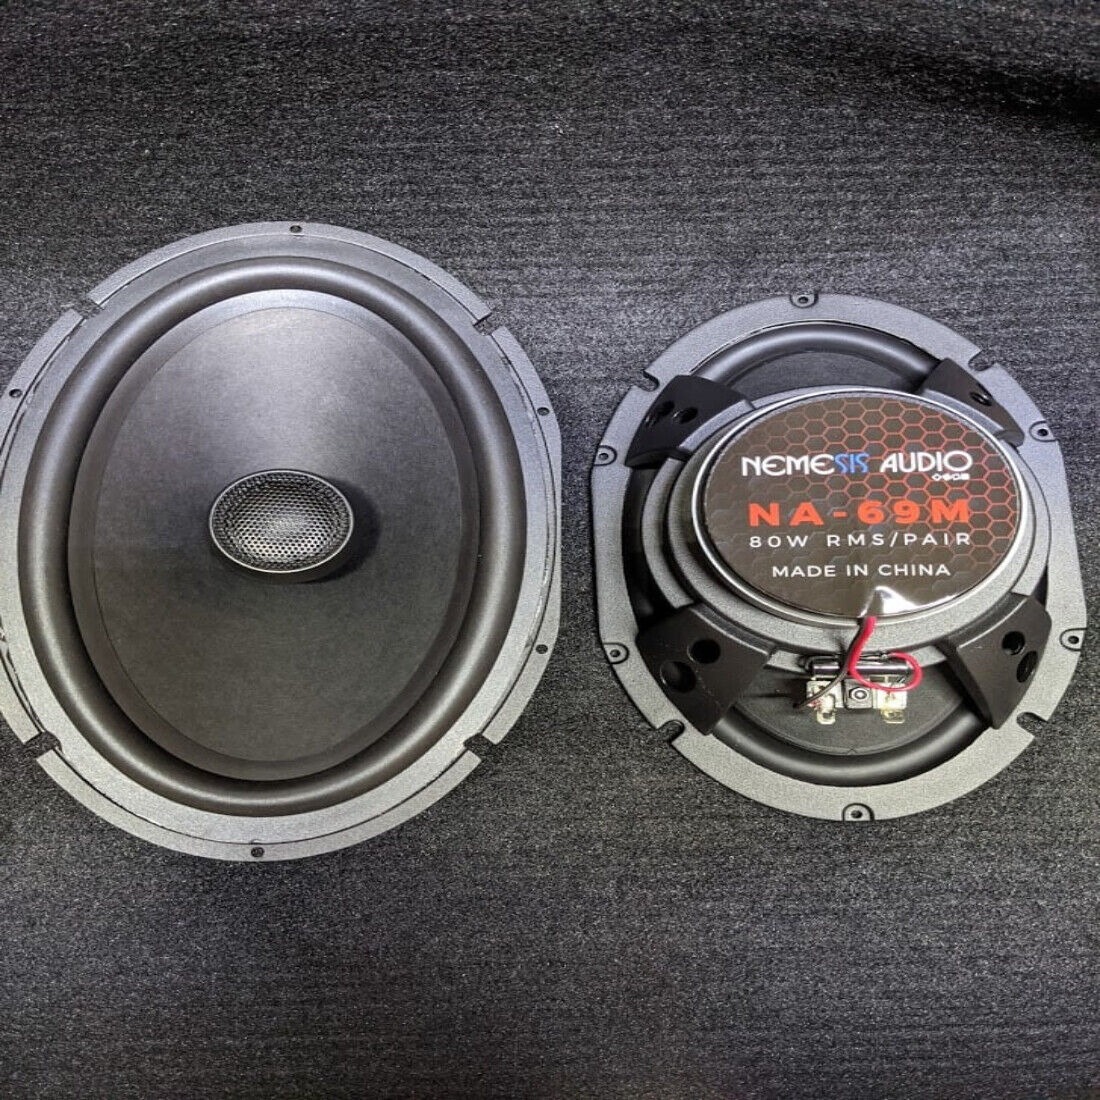 Maximize Your Sound System with Nemesis Car Audio Components”